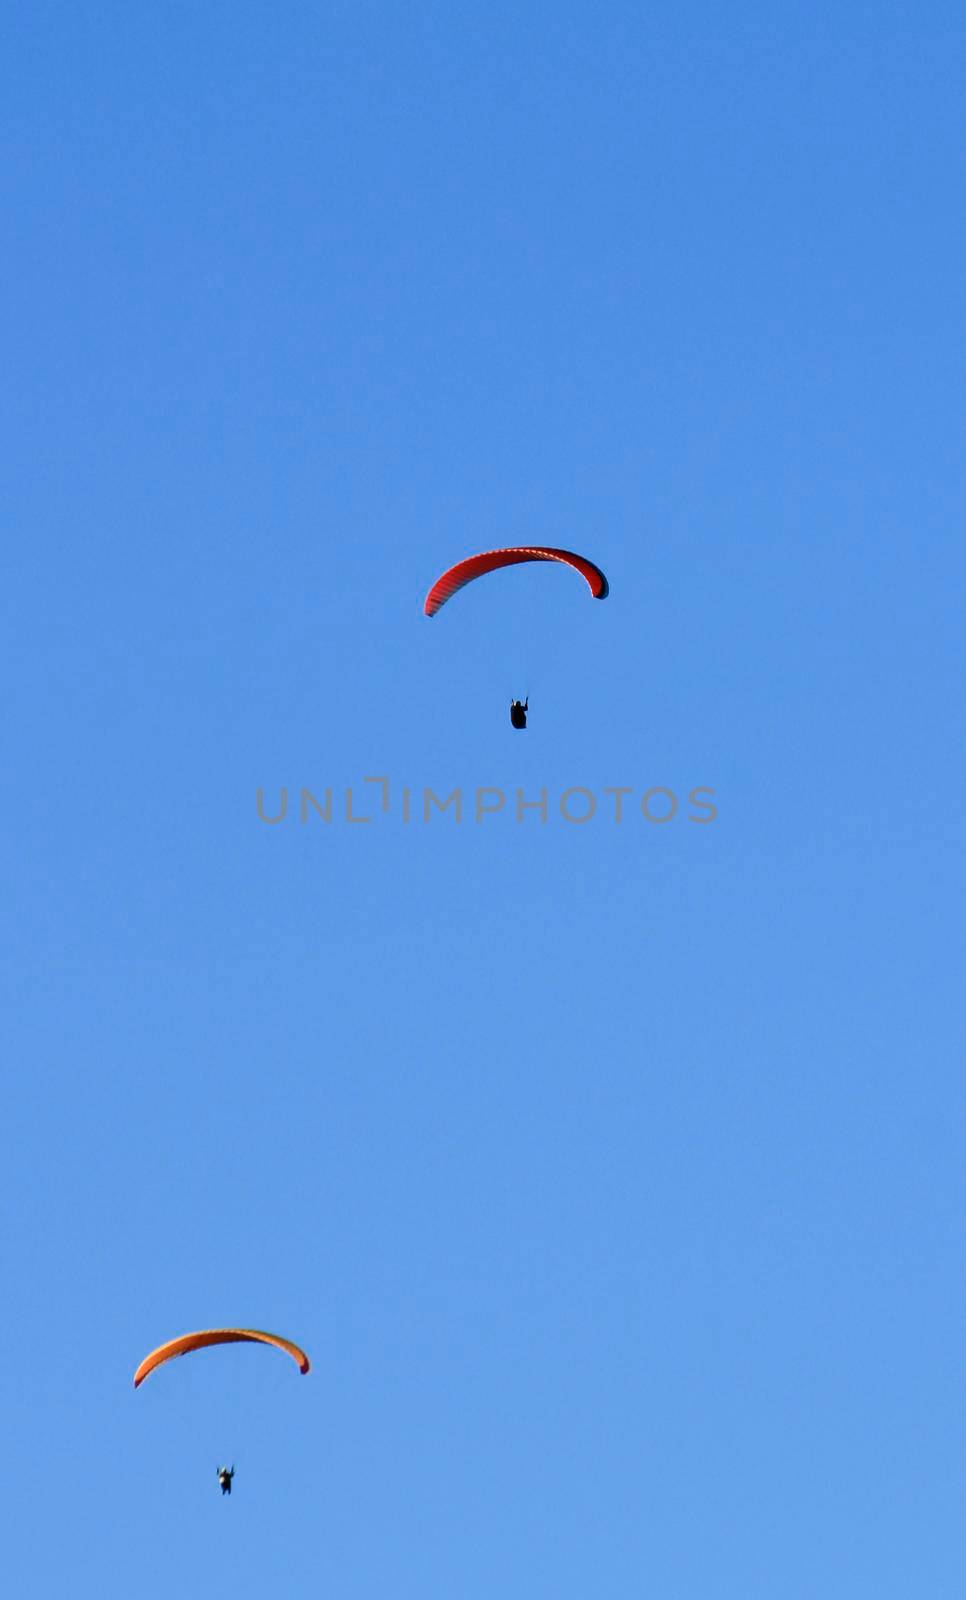 People paragliding on Santa Pola coast under blue sky by soniabonet